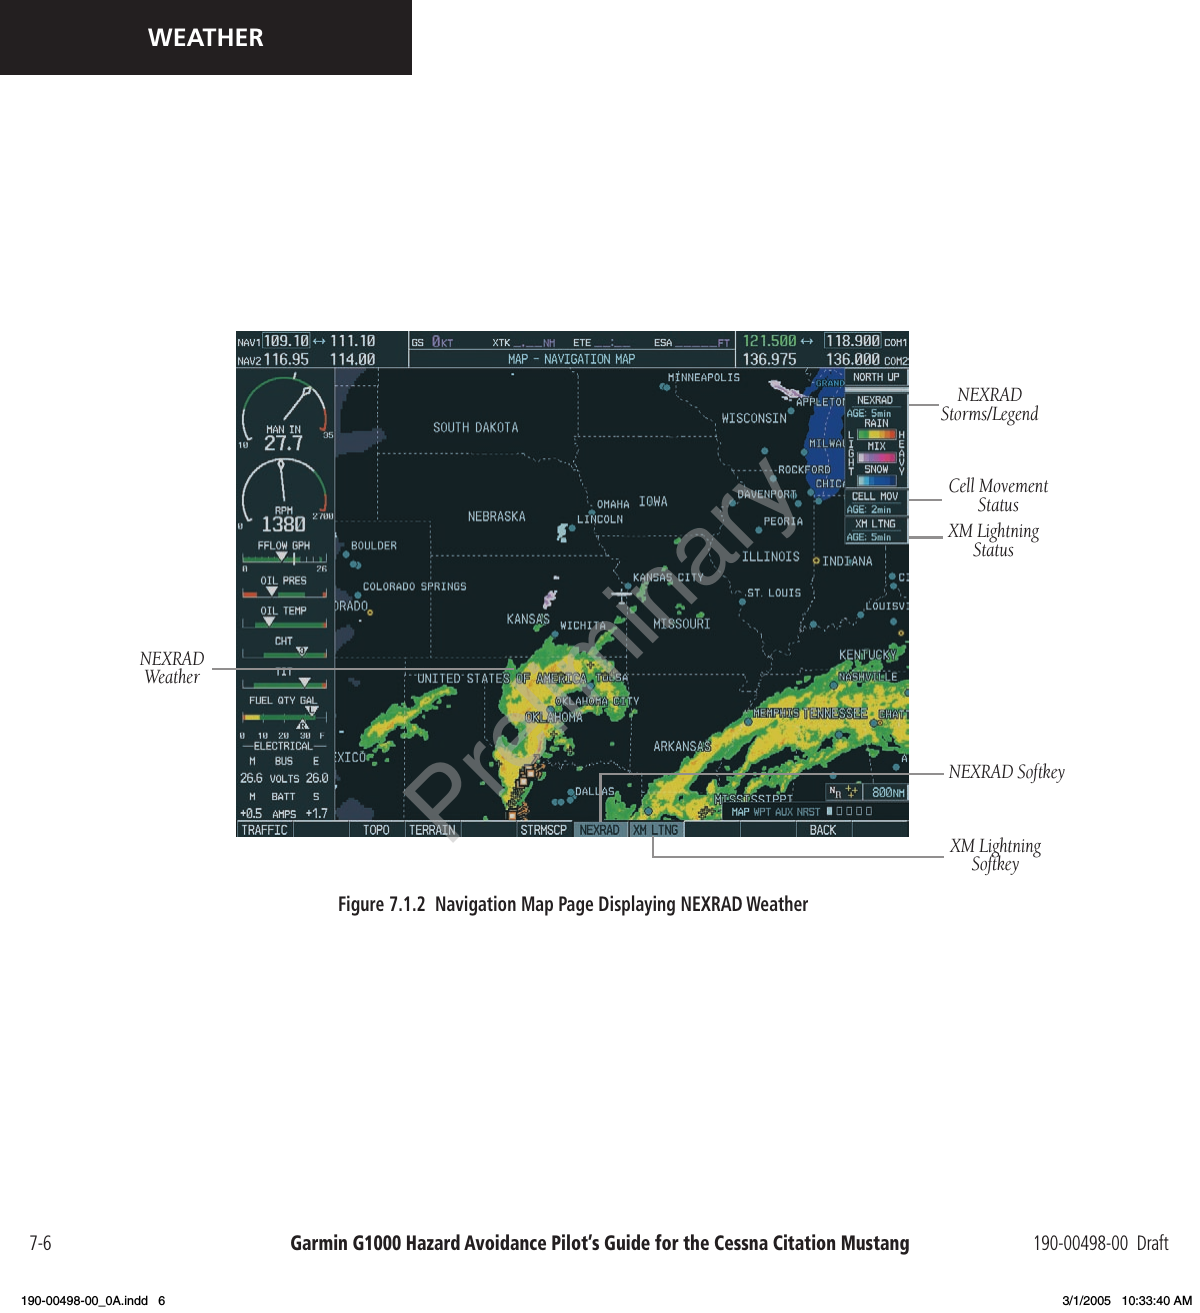 Garmin G1000 Hazard Avoidance Pilot’s Guide for the Cessna Citation Mustang 190-00498-00  Draft7-6WEATHERCell Movement  StatusXM Lightning StatusXM Lightning SoftkeyFigure 7.1.2  Navigation Map Page Displaying NEXRAD WeatherNEXRAD SoftkeyNEXRAD WeatherNEXRAD Storms/LegendPreliminary190-00498-00_0A.indd   6 3/1/2005   10:33:40 AM